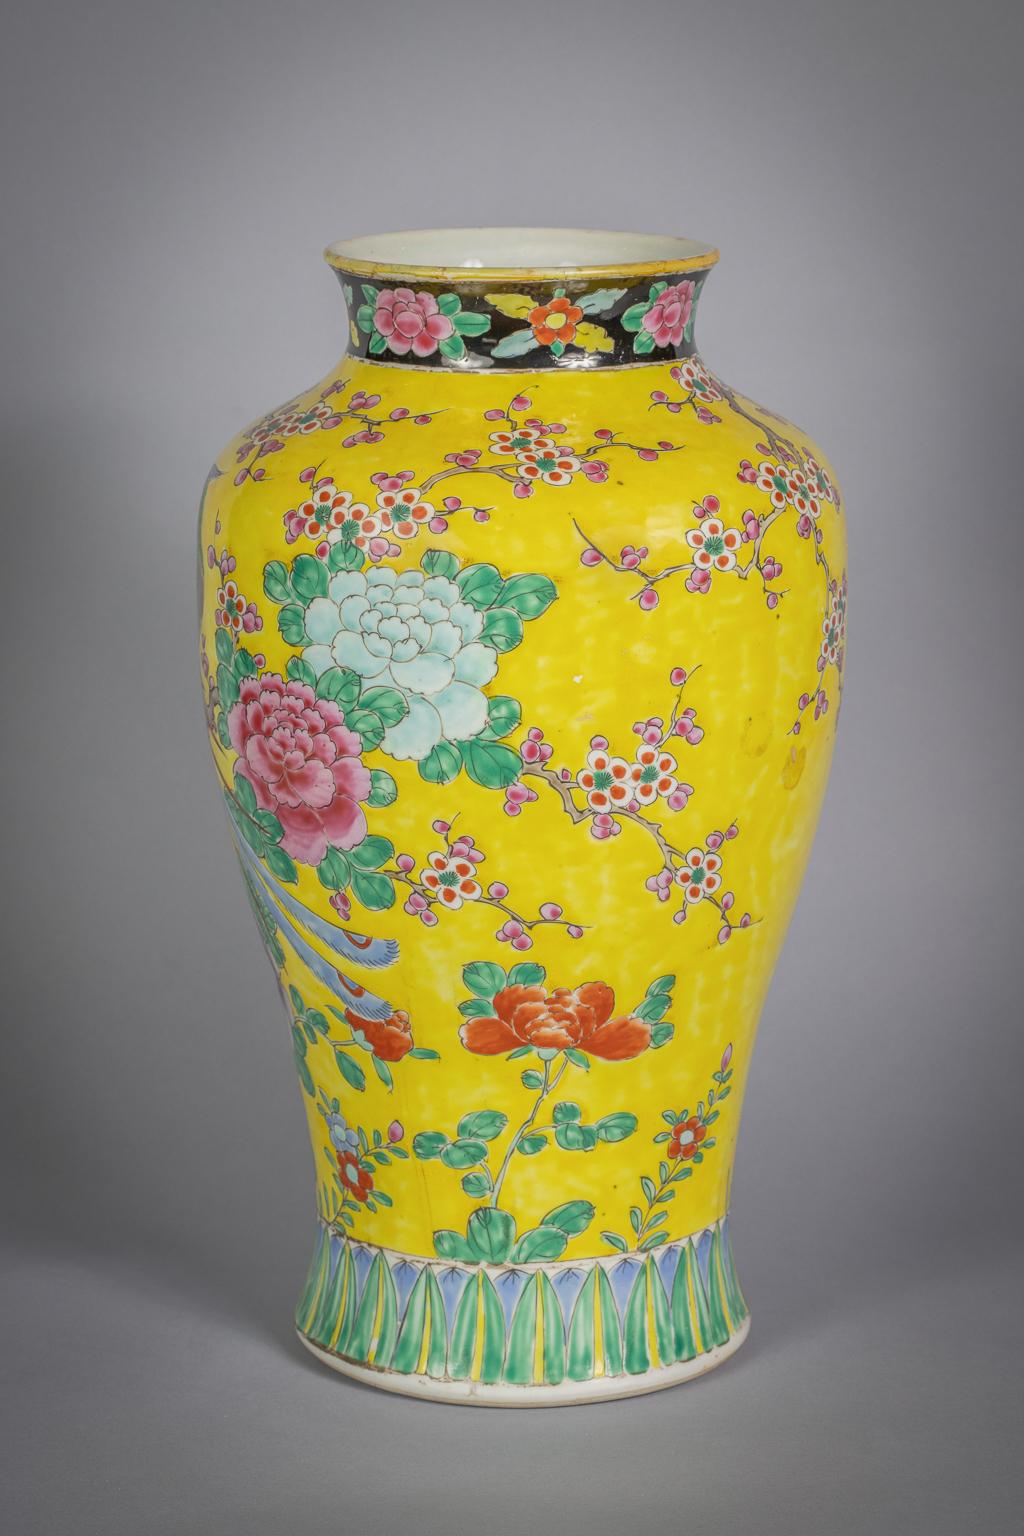 made in japan vase